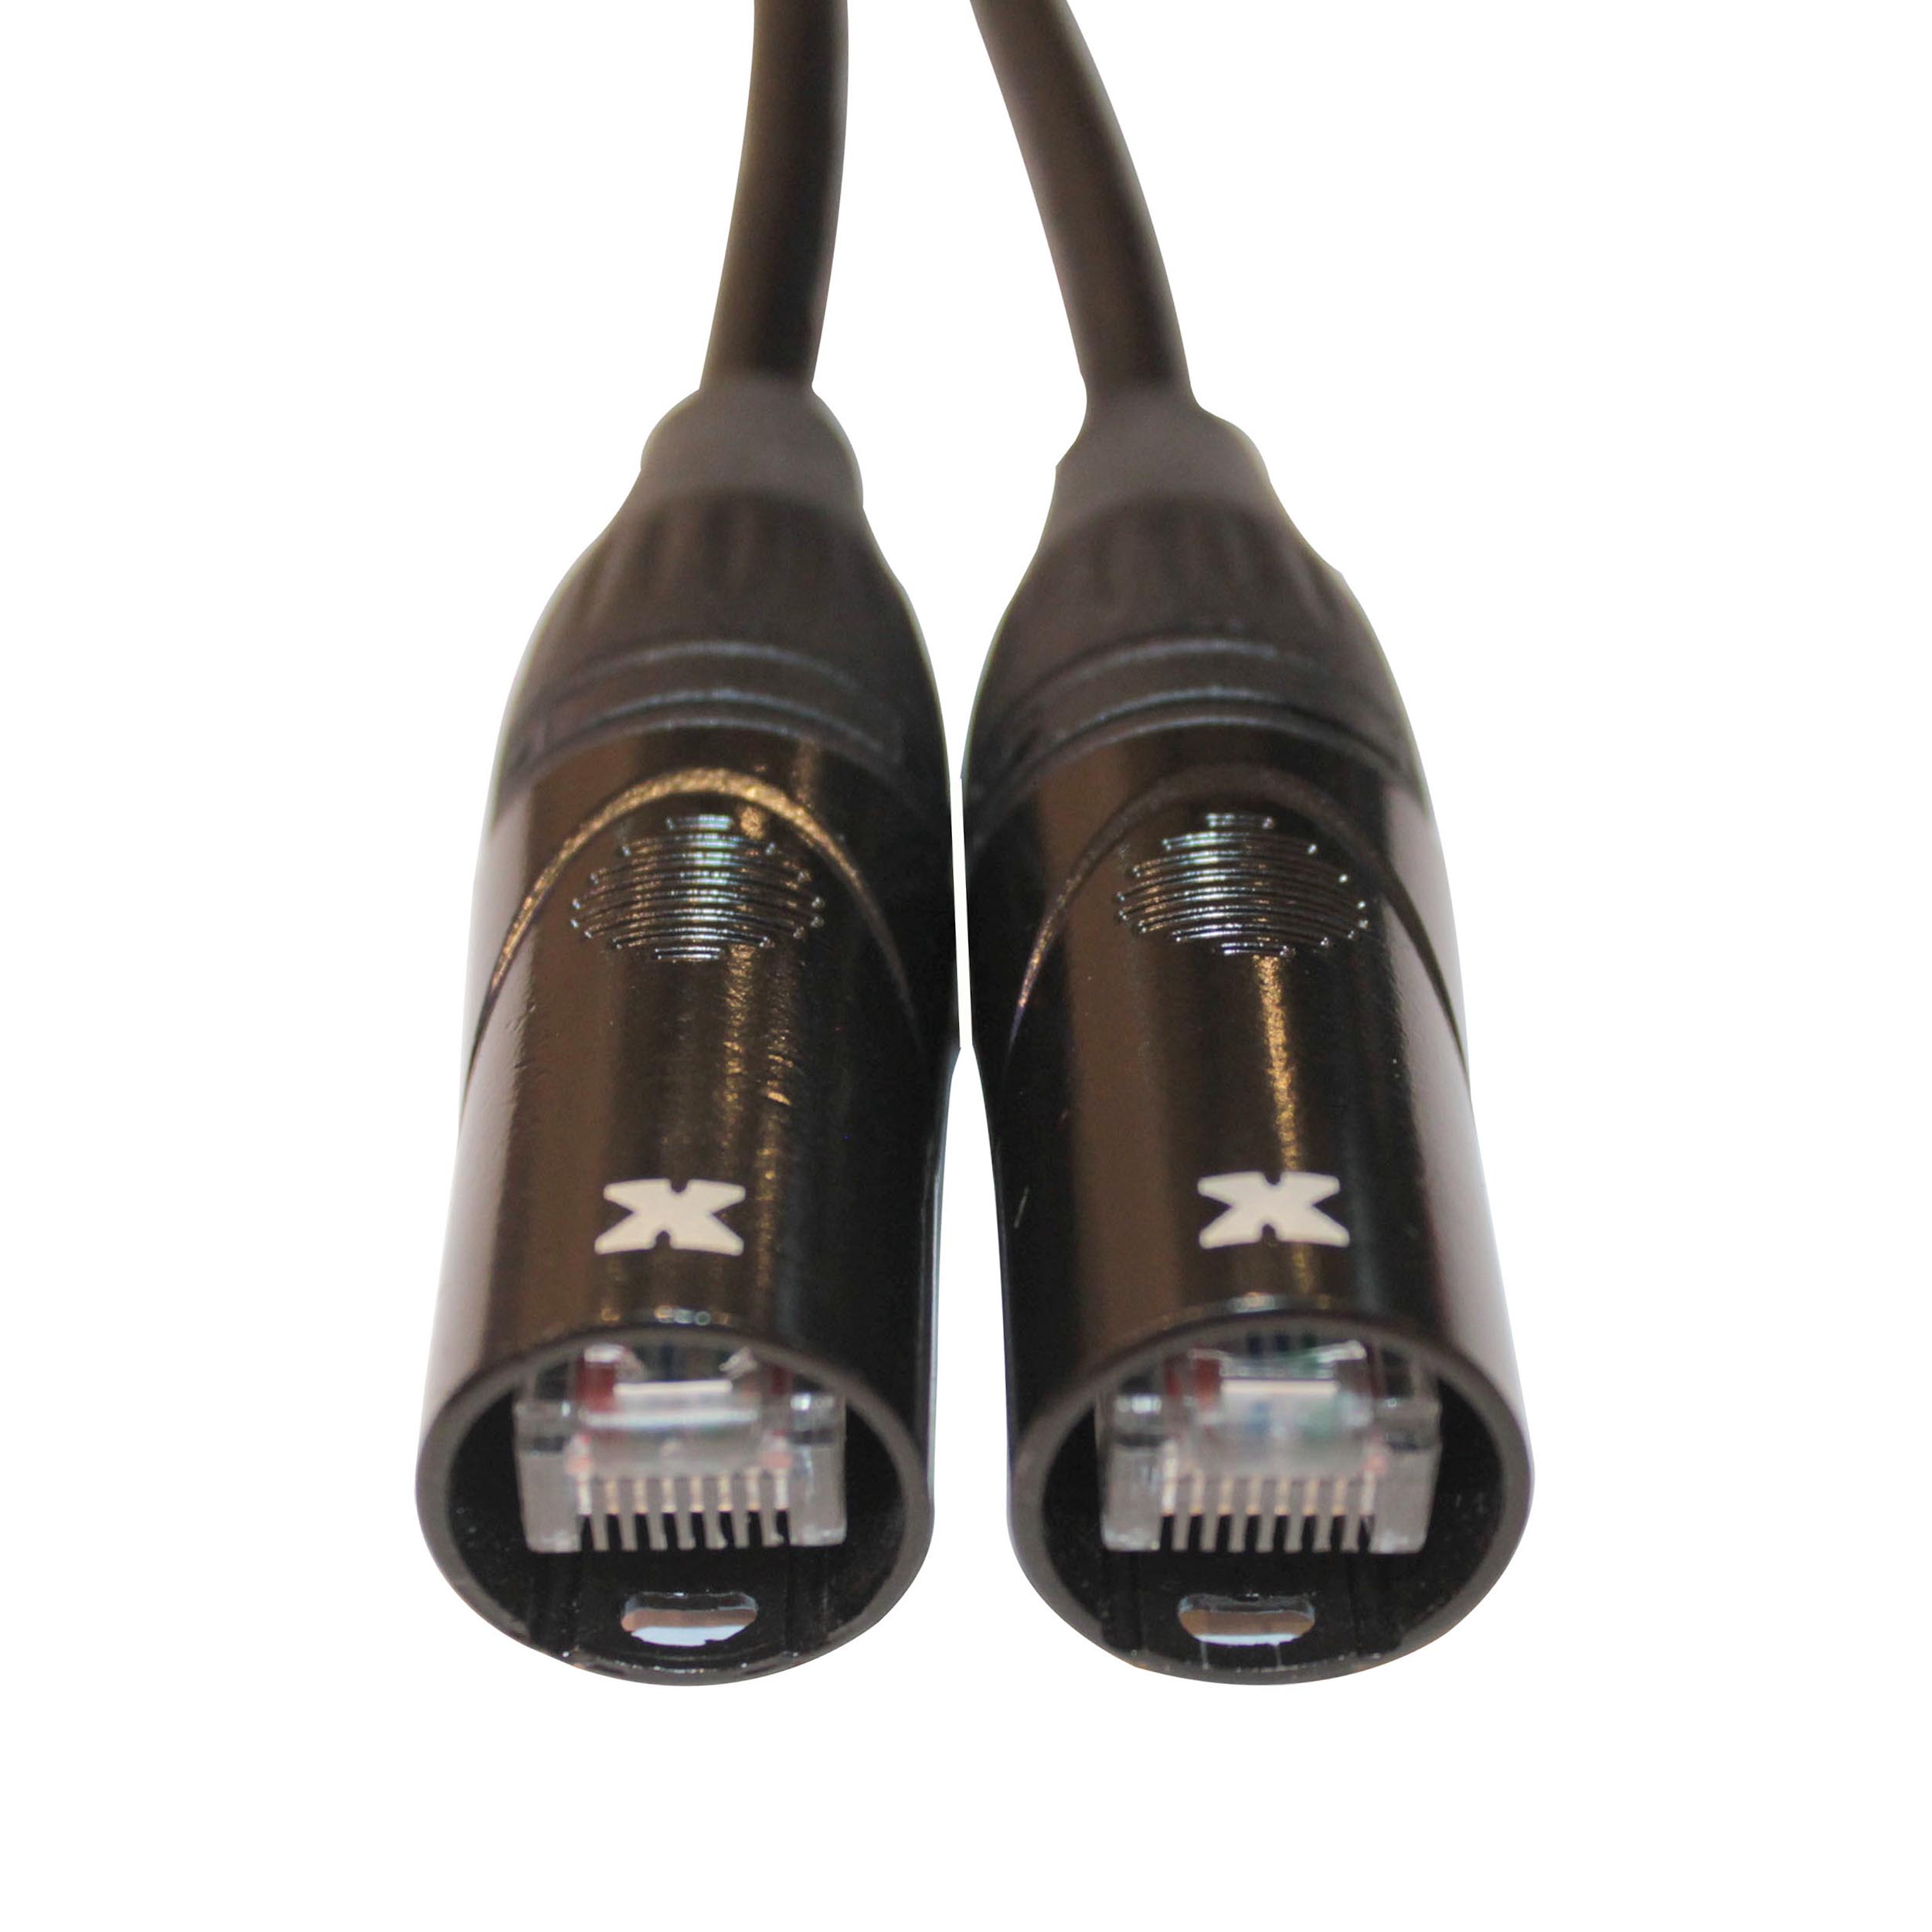 prox-xc-cat6-100-100ft-cat-6-cable.jpg